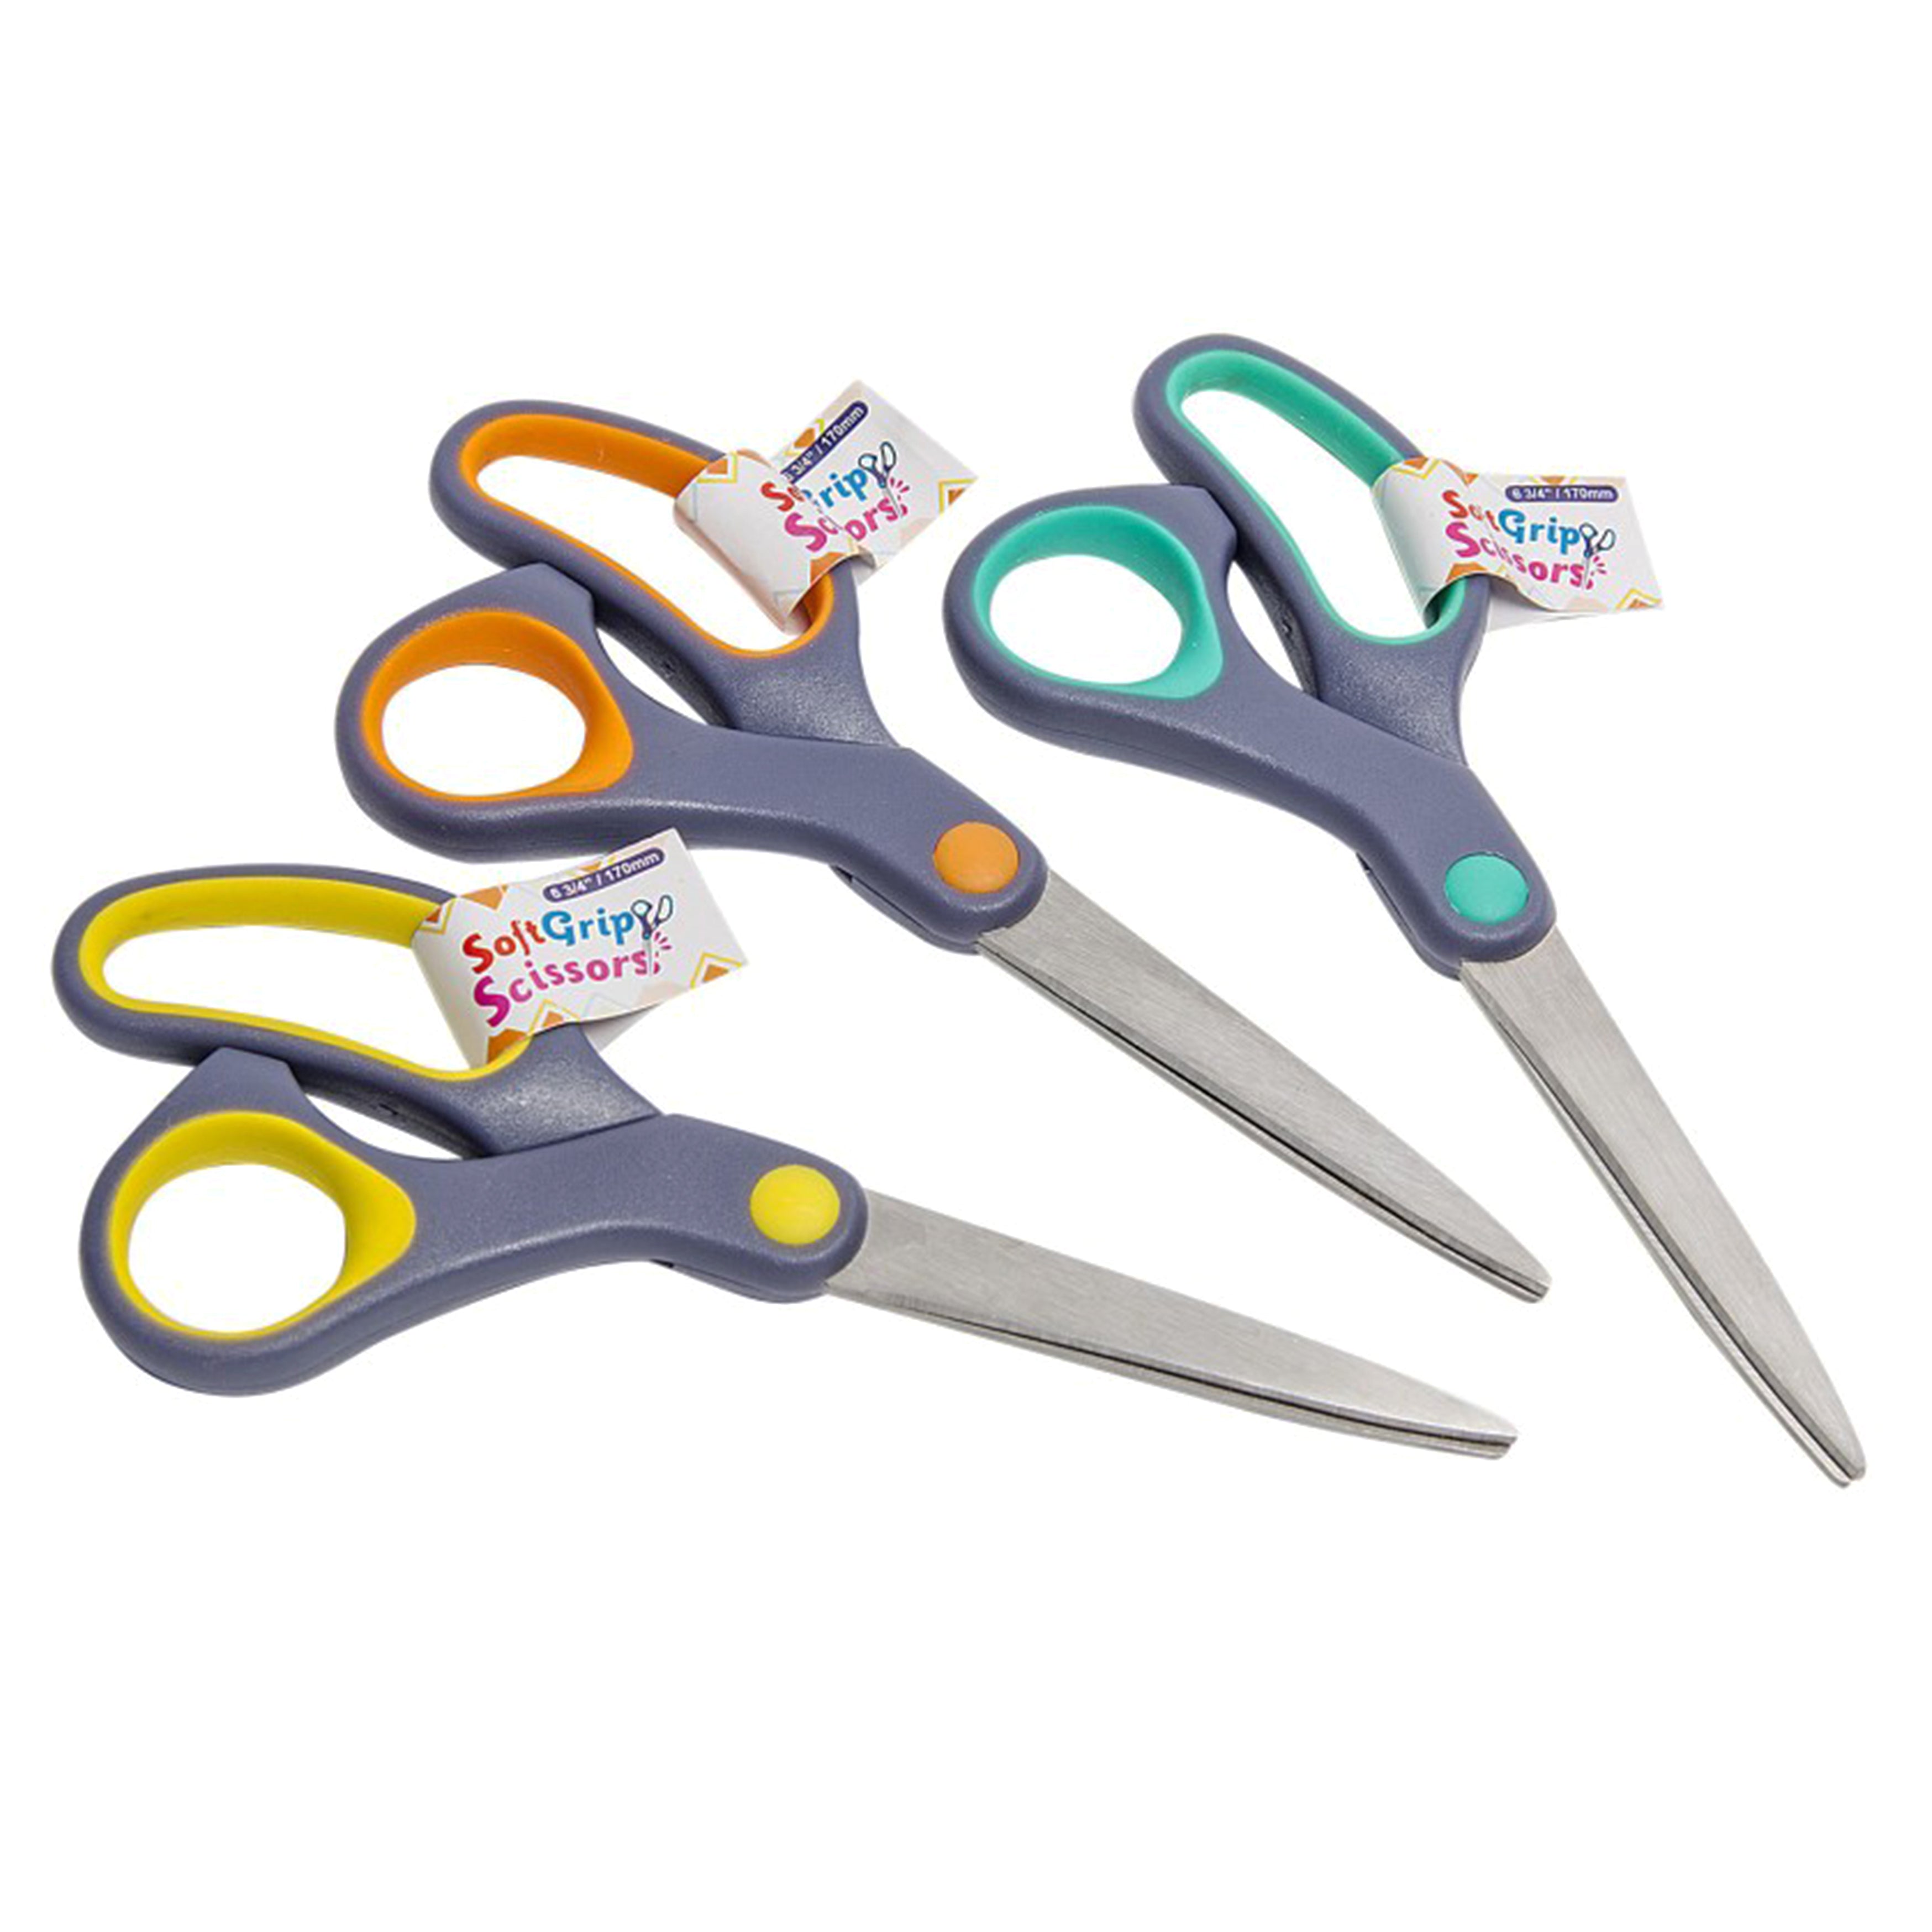 General Purpose Hobby Scissors with Soft Grip Handle: 17cm